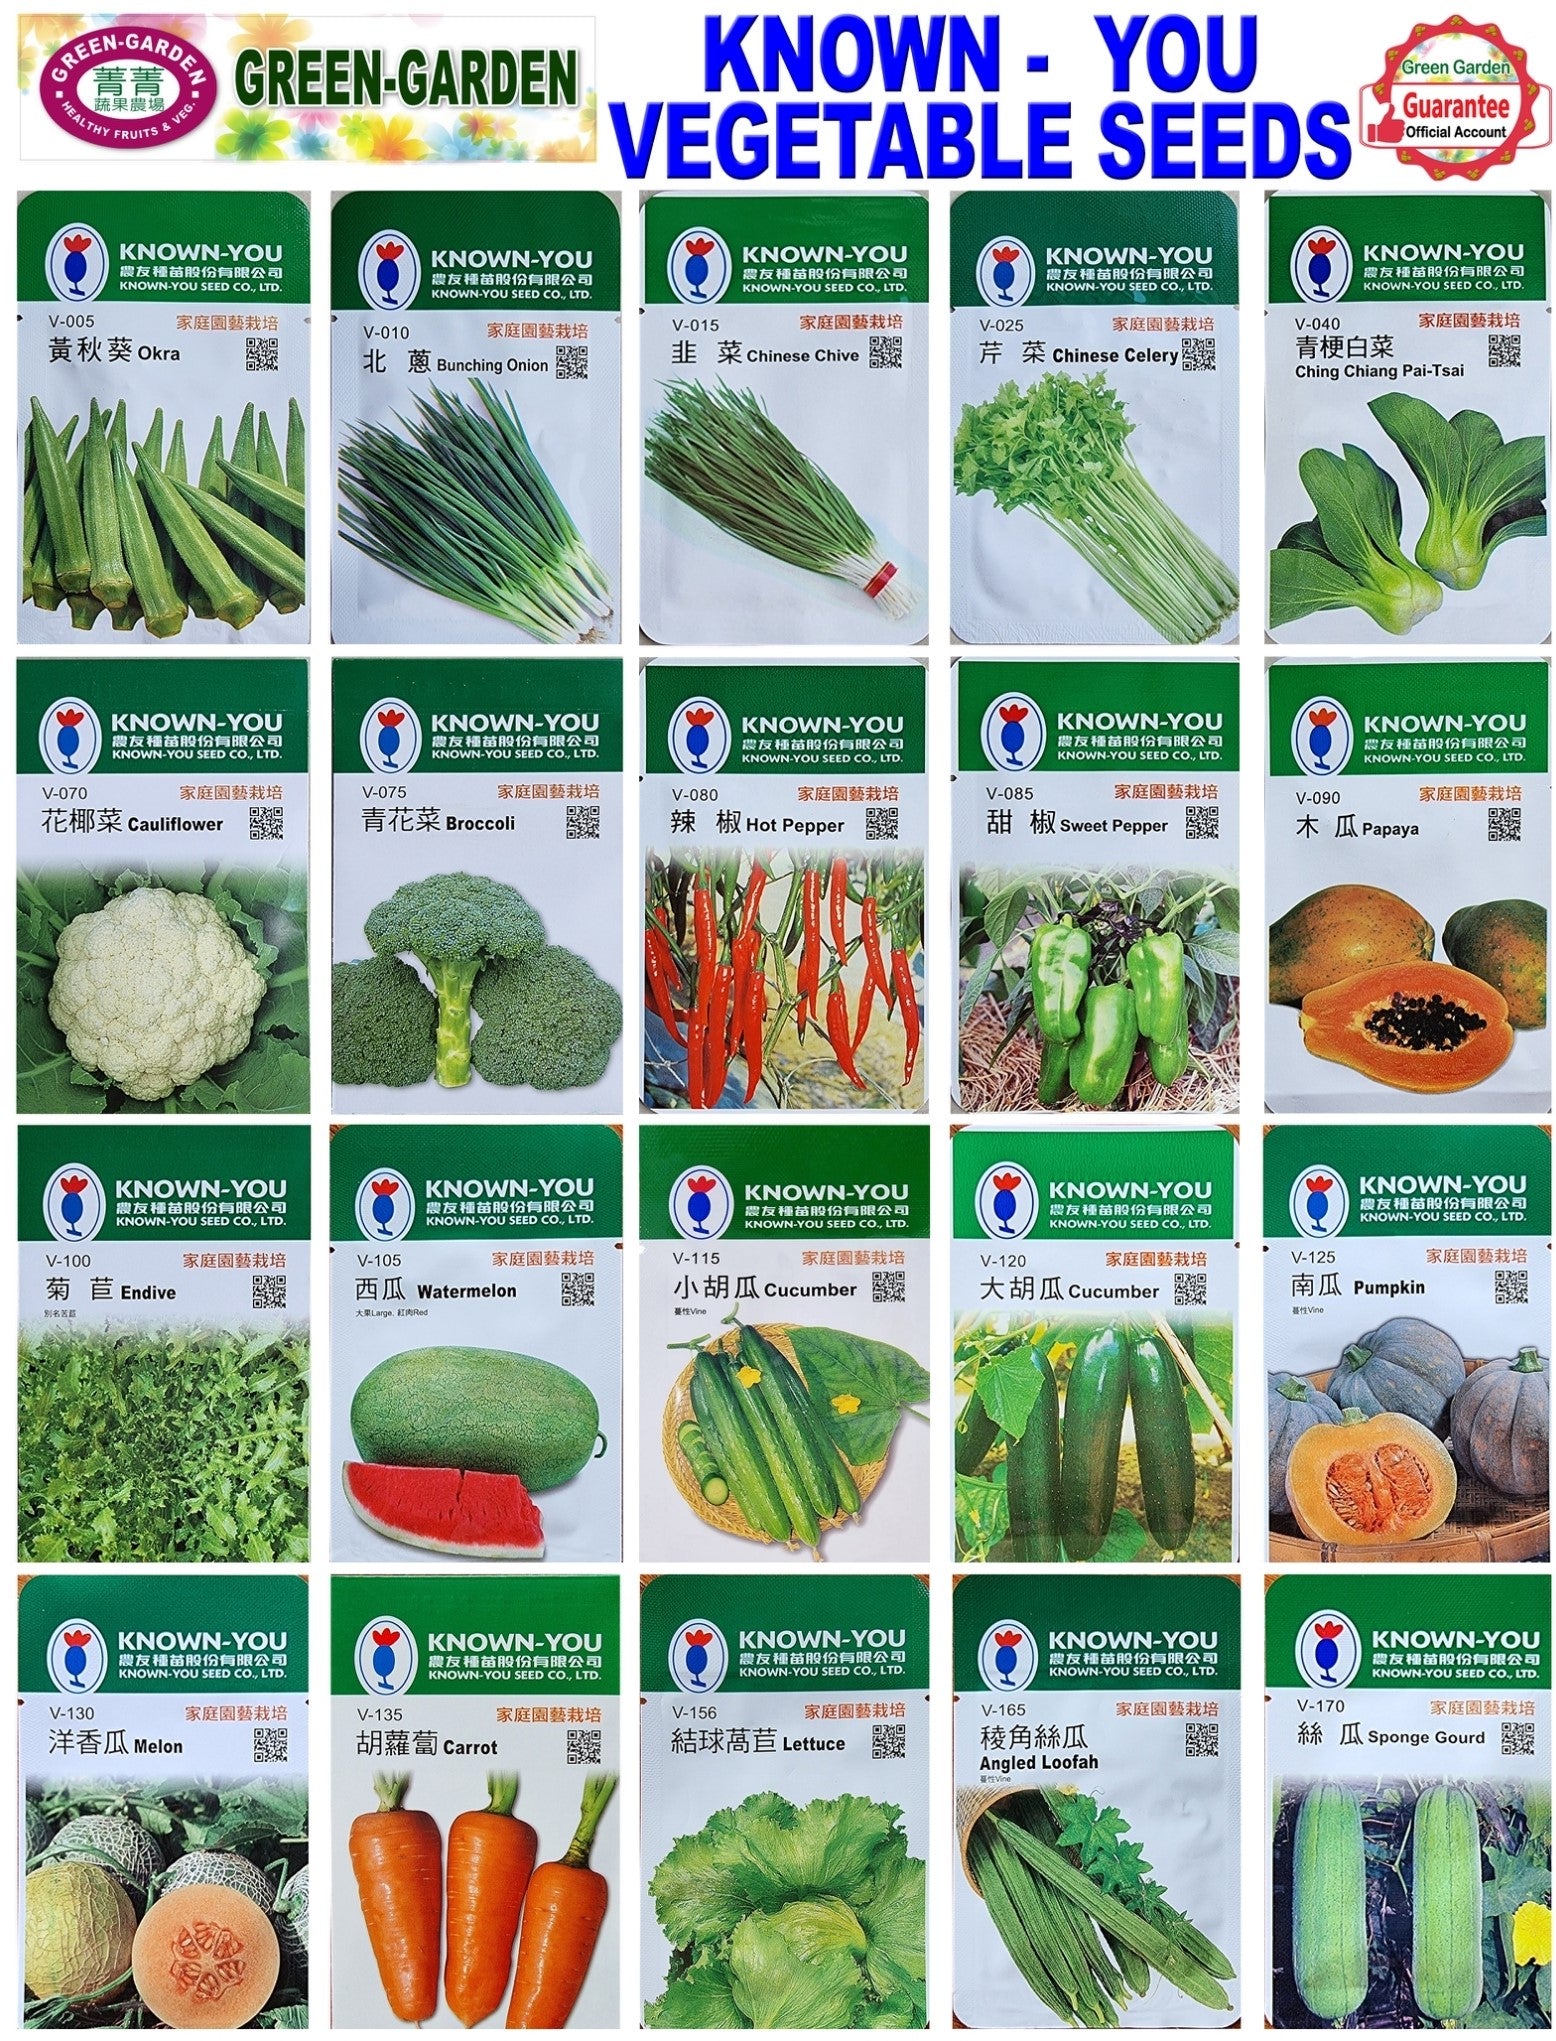 Known You Vegetable Seeds (V-235 Asparagus Bean)